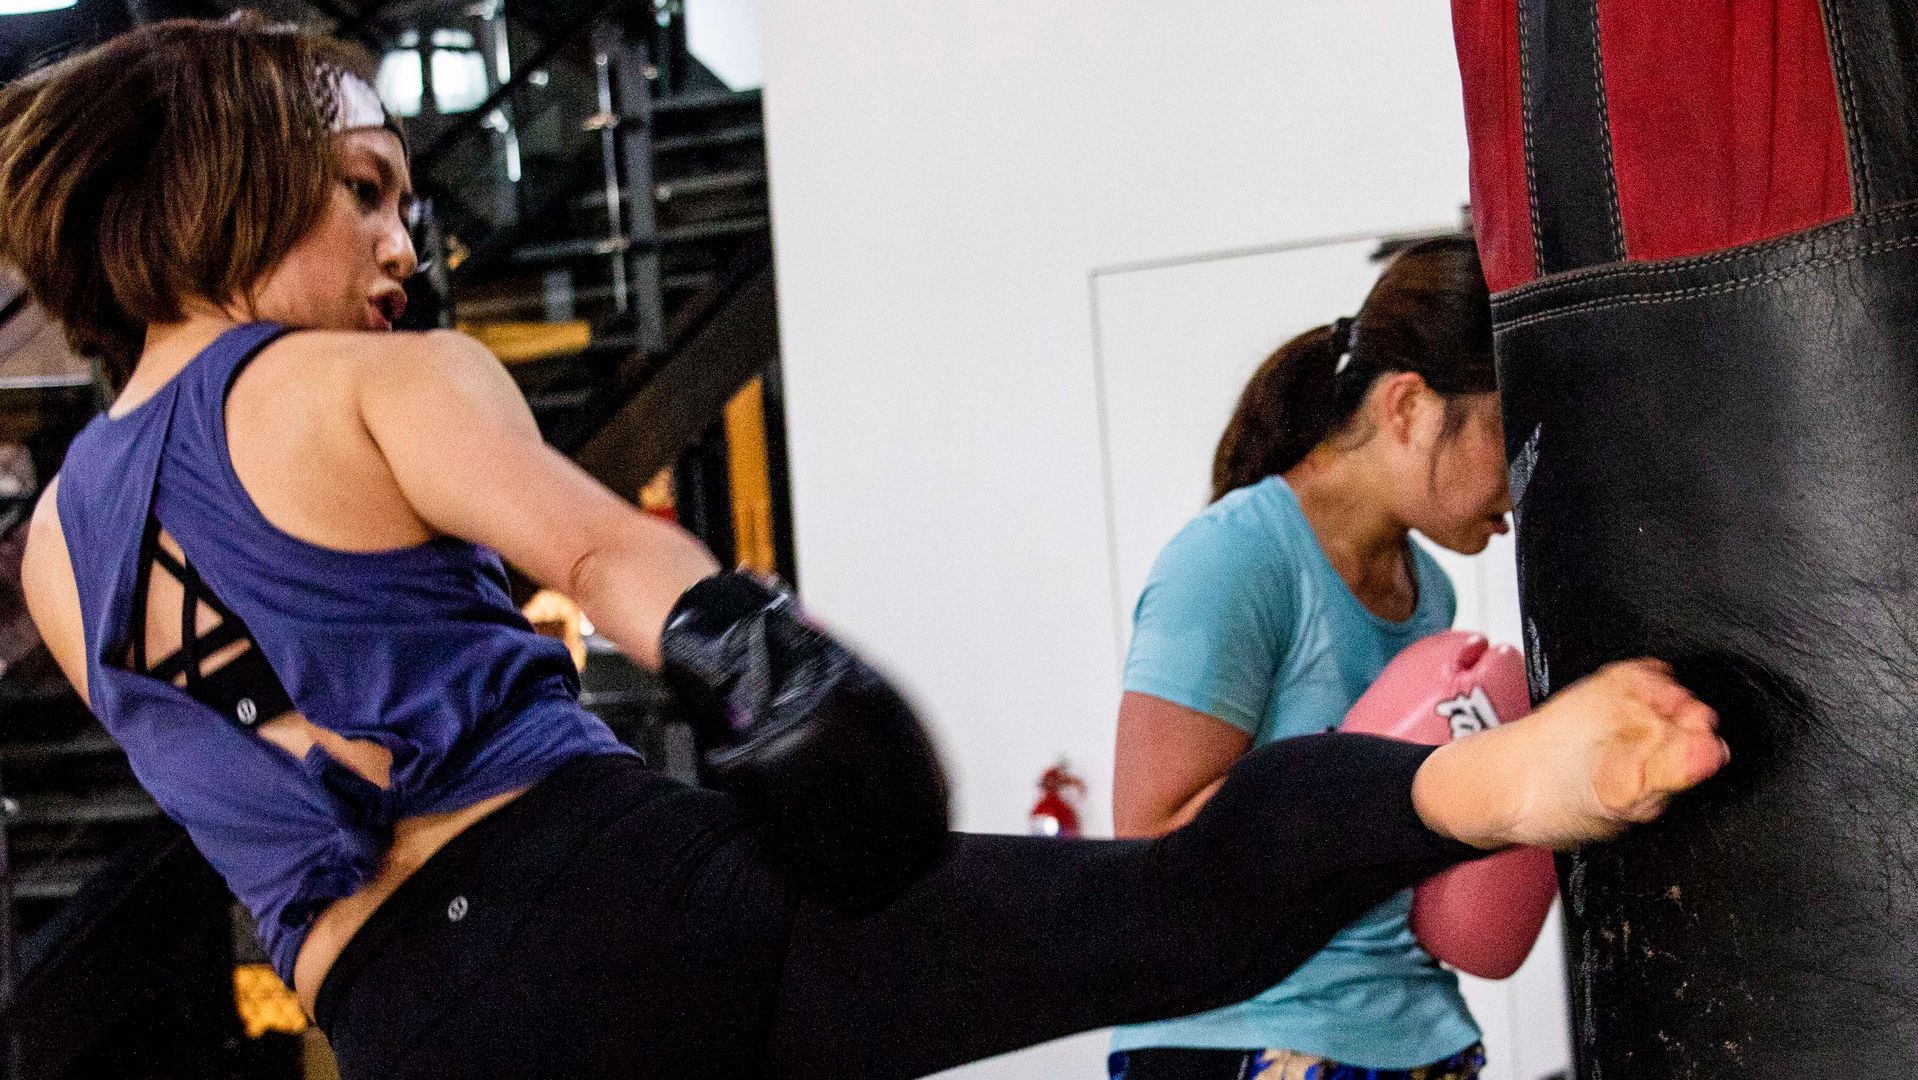 A women kicking a heavy bag during a Muay Thai class